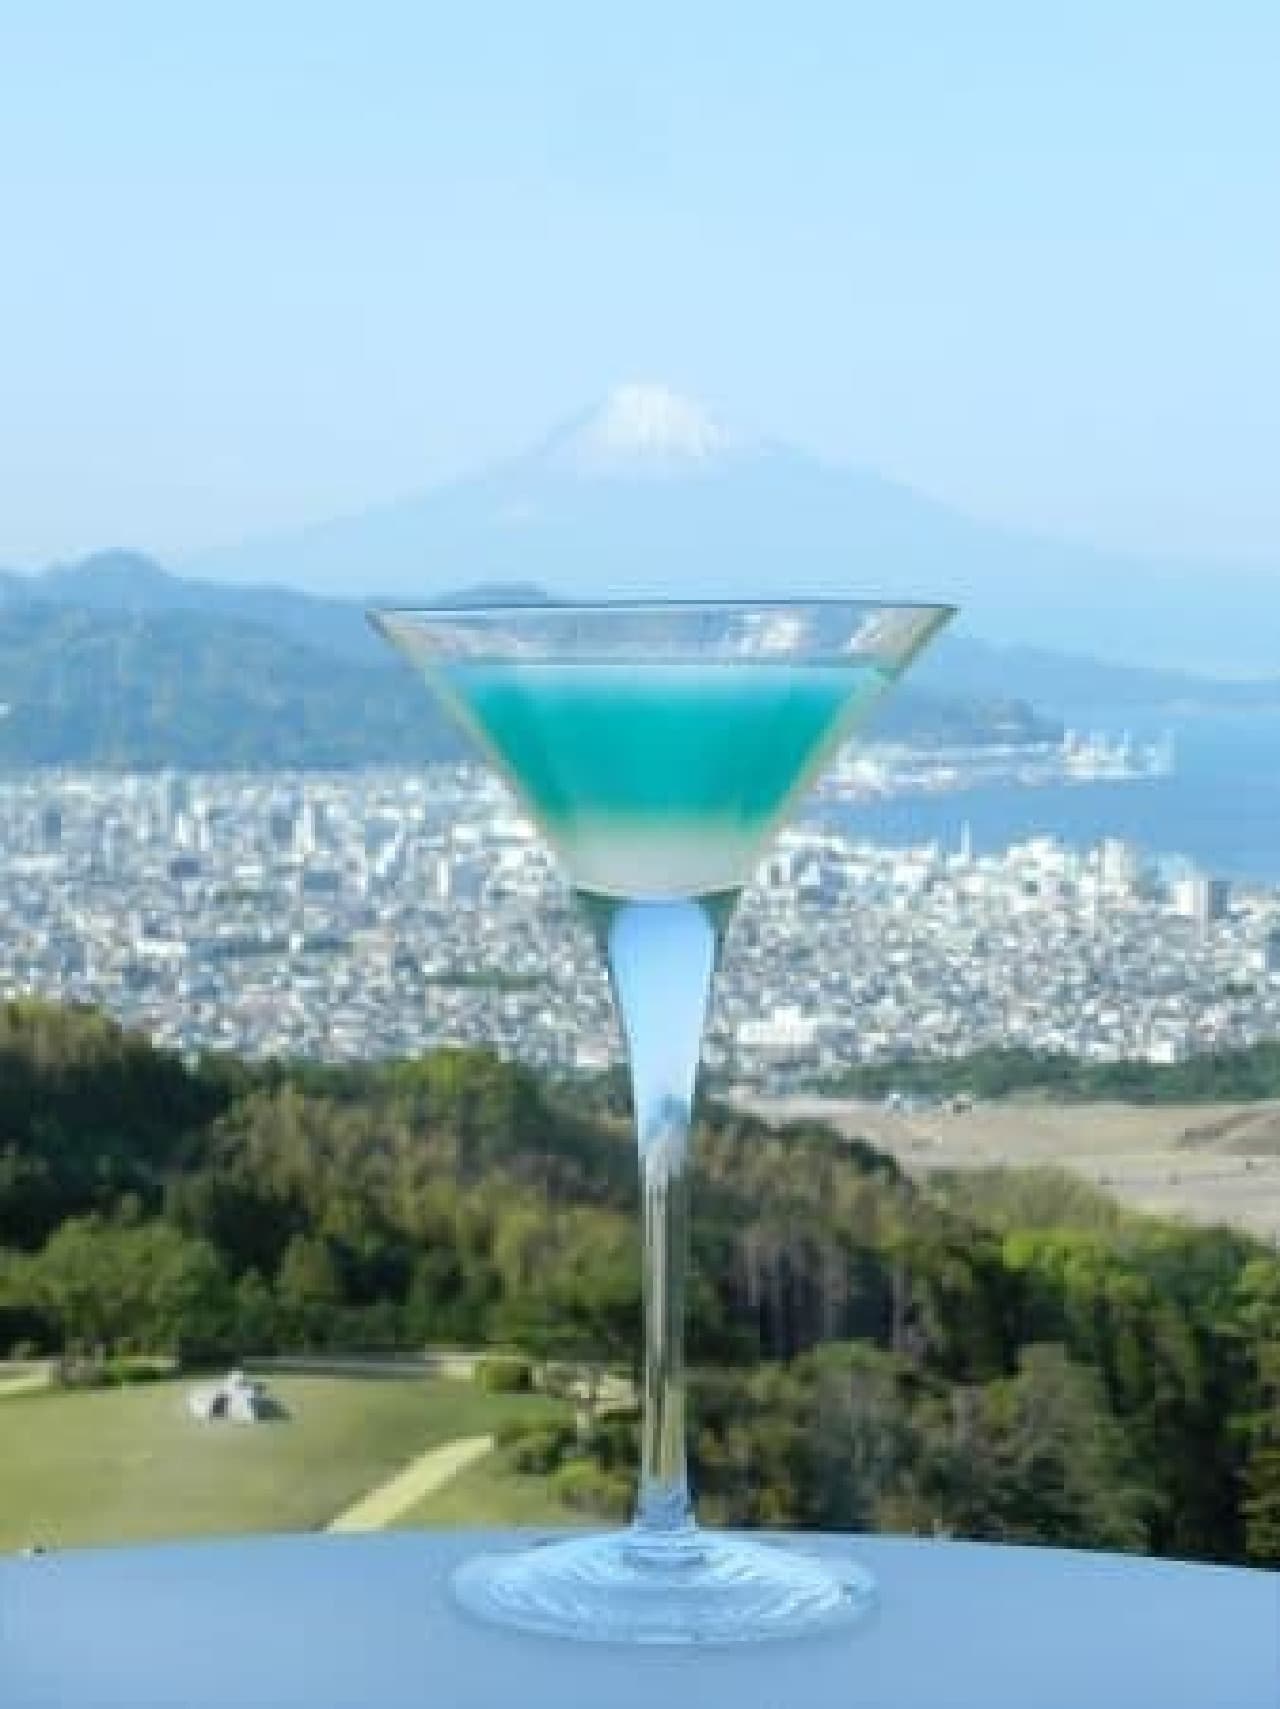 Stunning "upside down Fuji"!